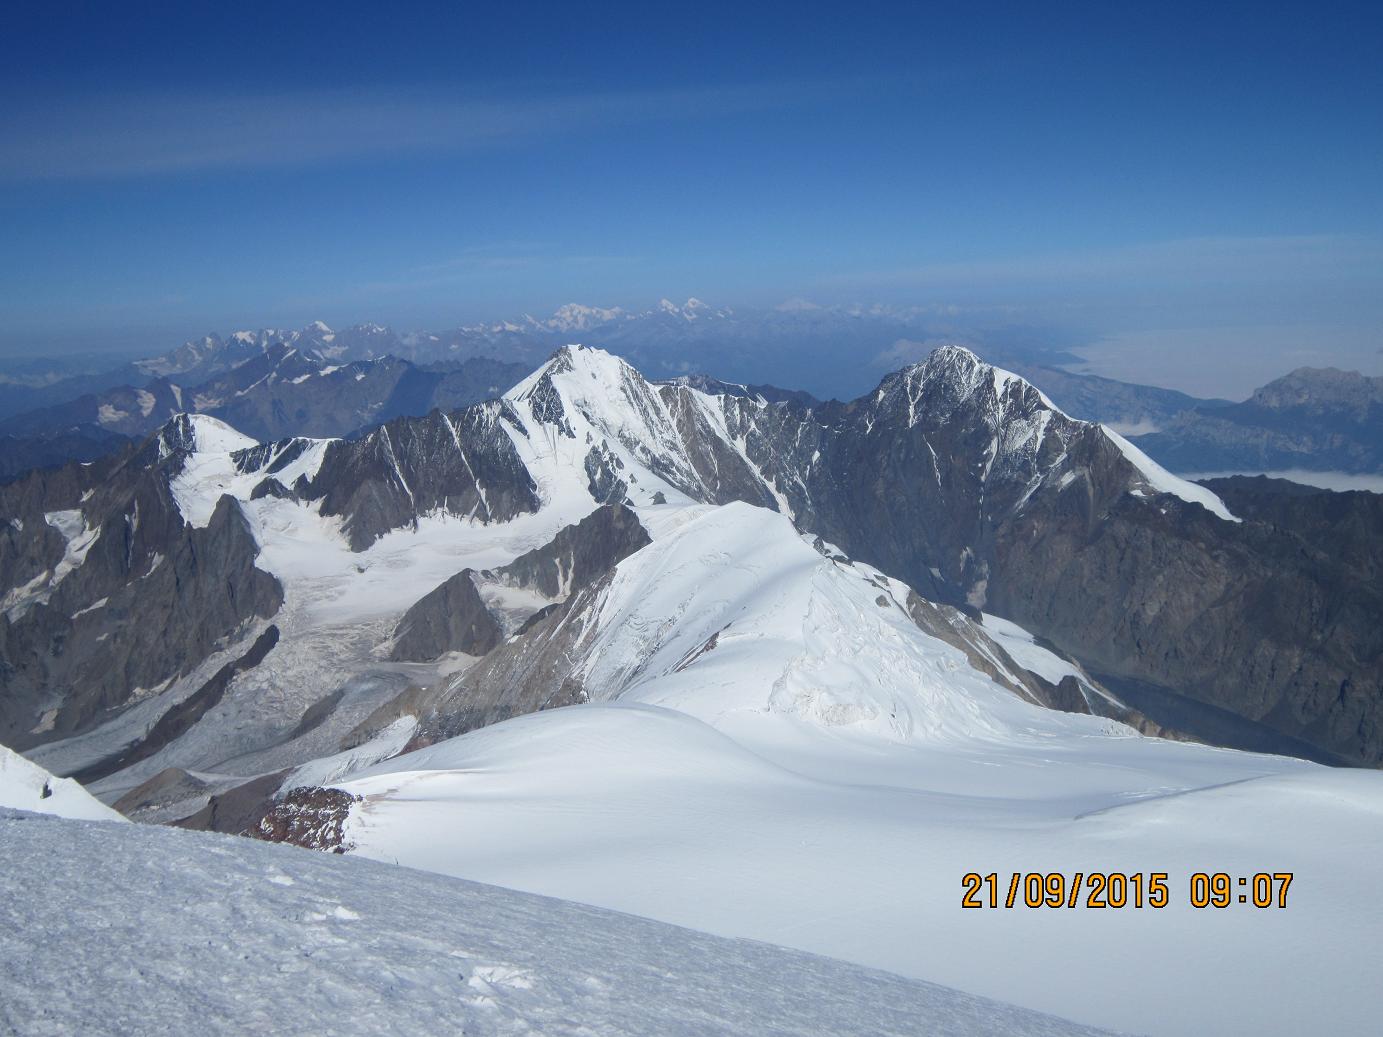 Elbrus from Kazbek summit, Mount Elbrus